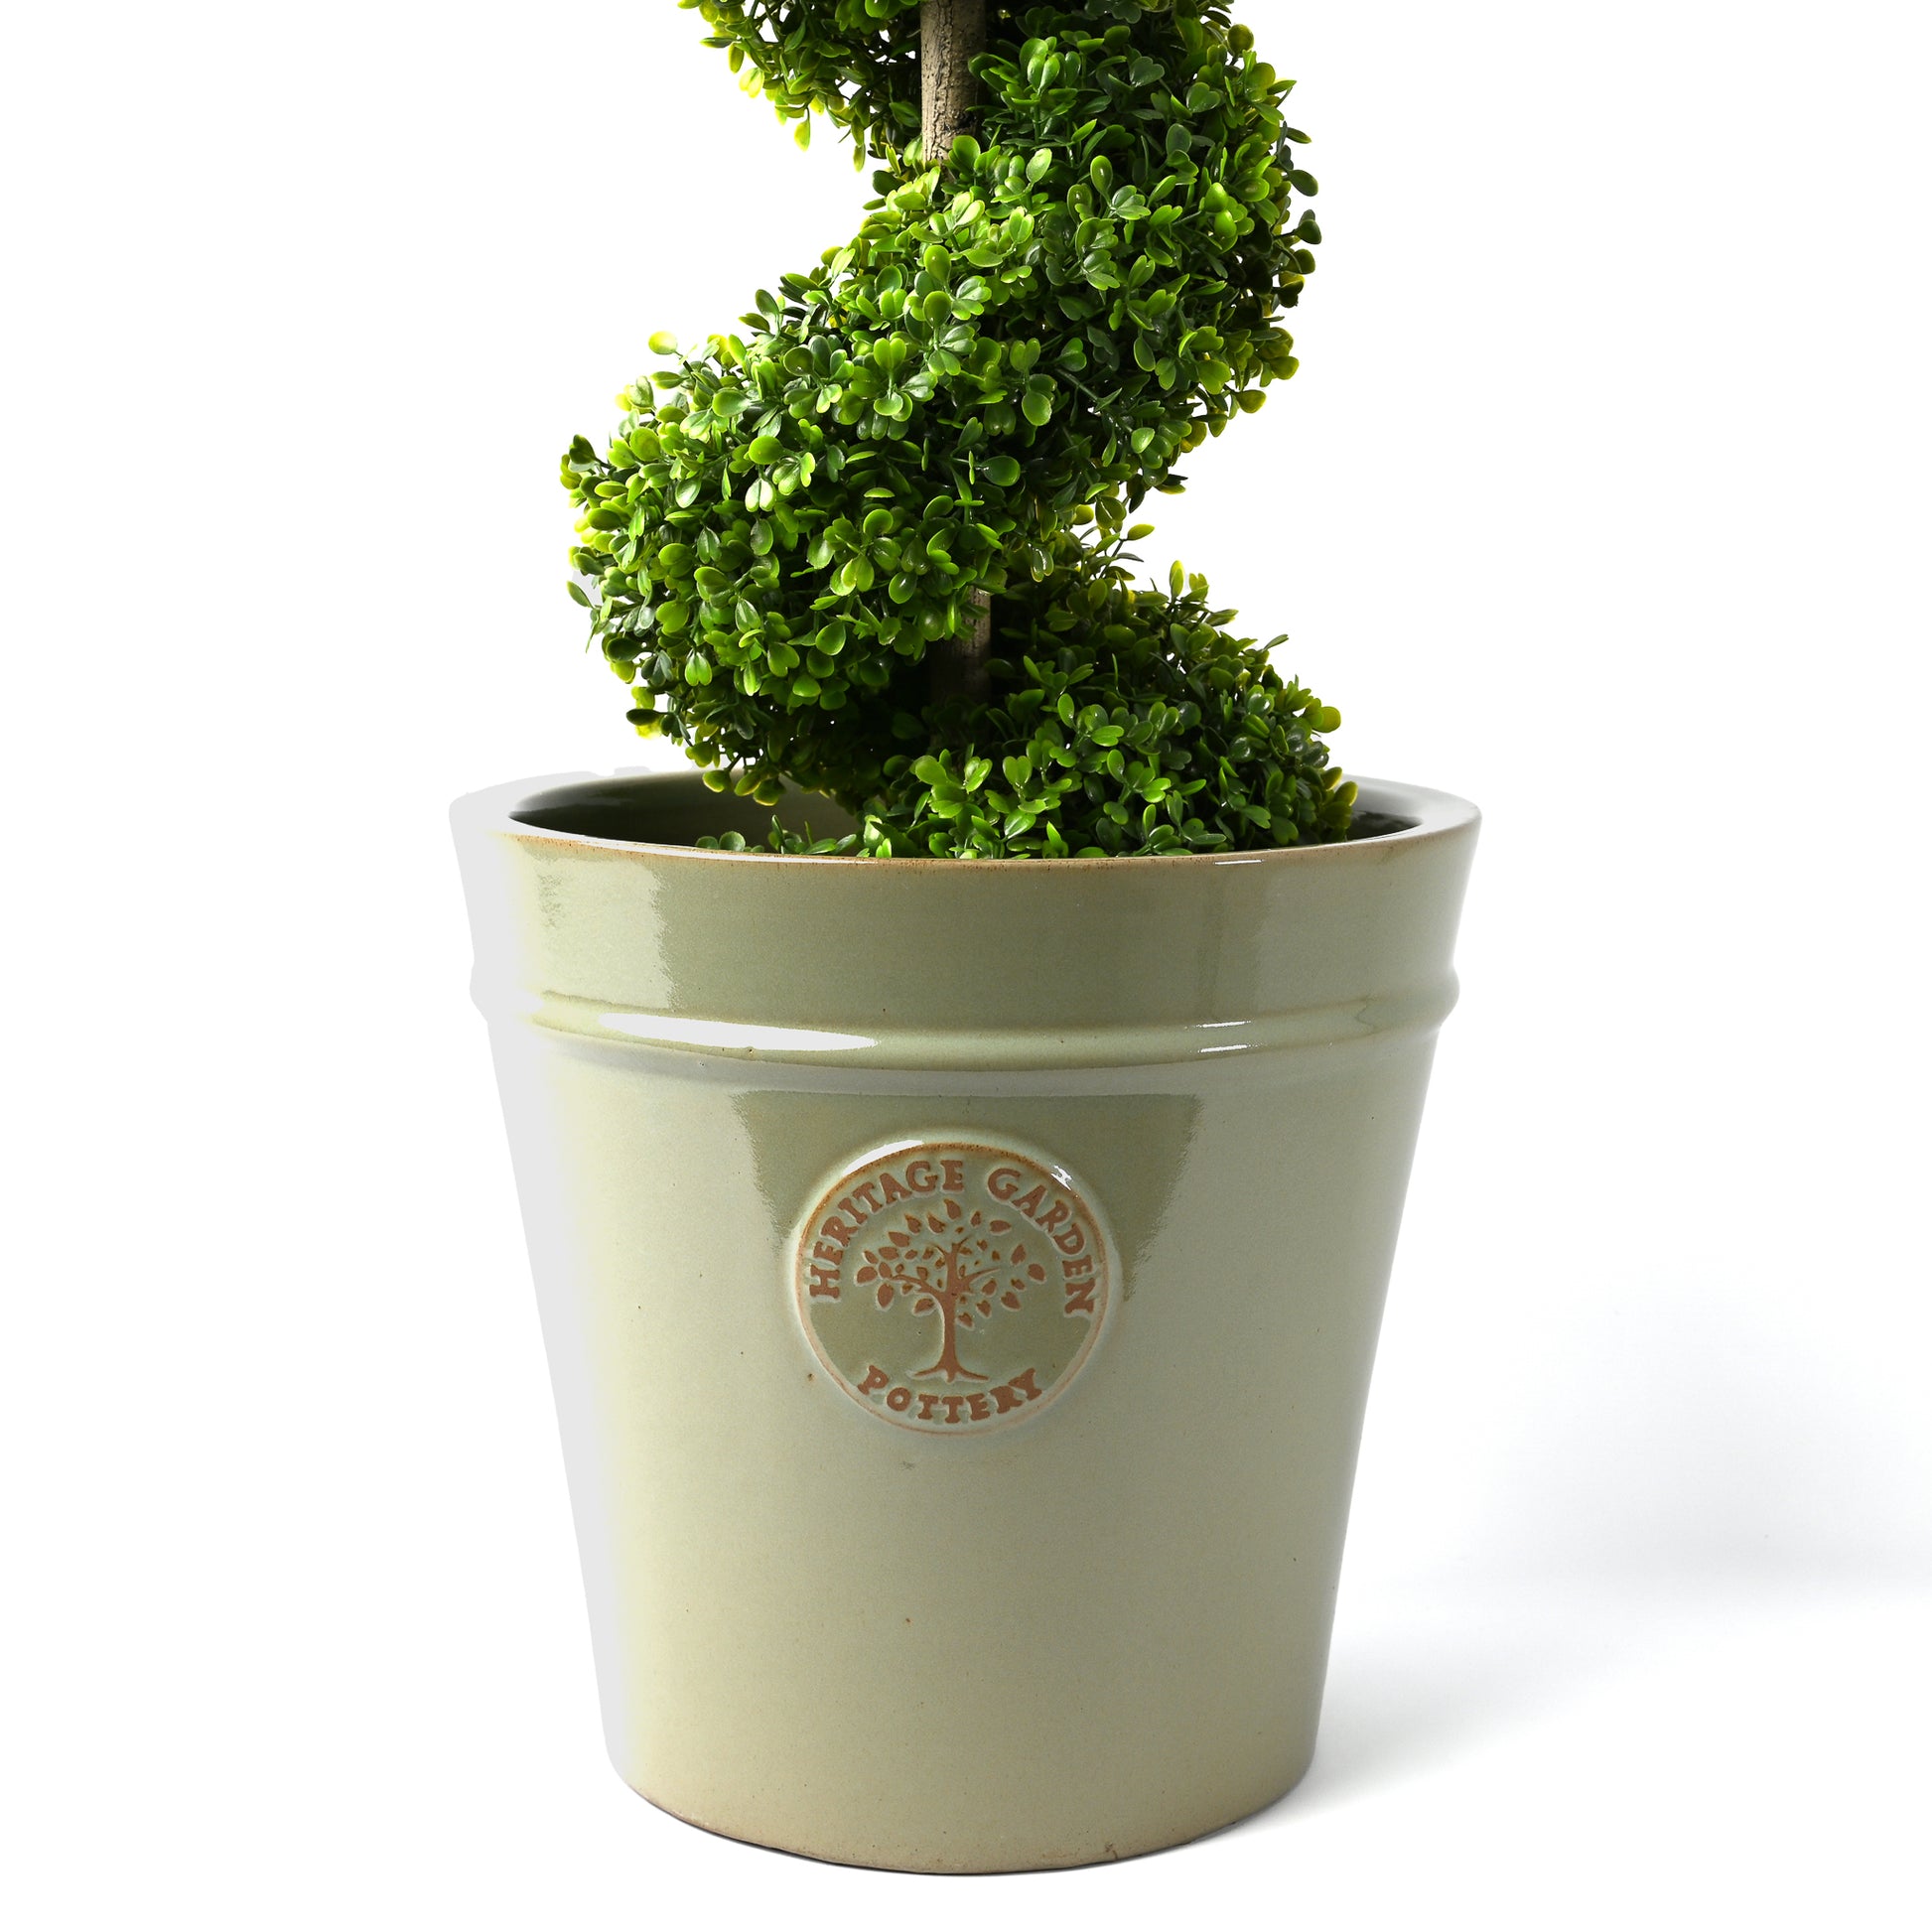 Swirly topiary in matching green pot